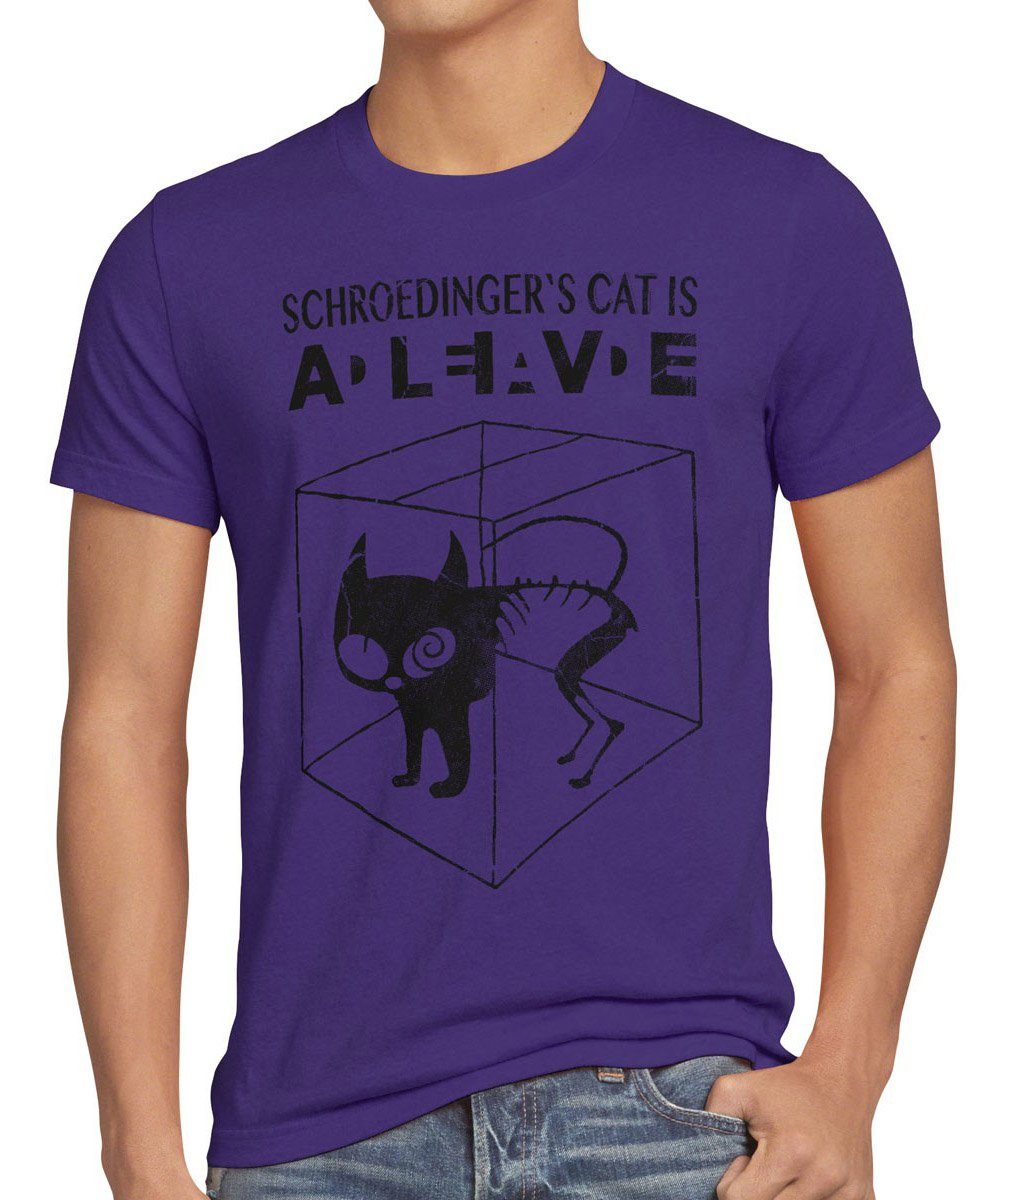 style3 Print-Shirt Herren neu lila Big T-Shirt schrödingers Schroedinger's Theory cat Katze Sheldon Bang